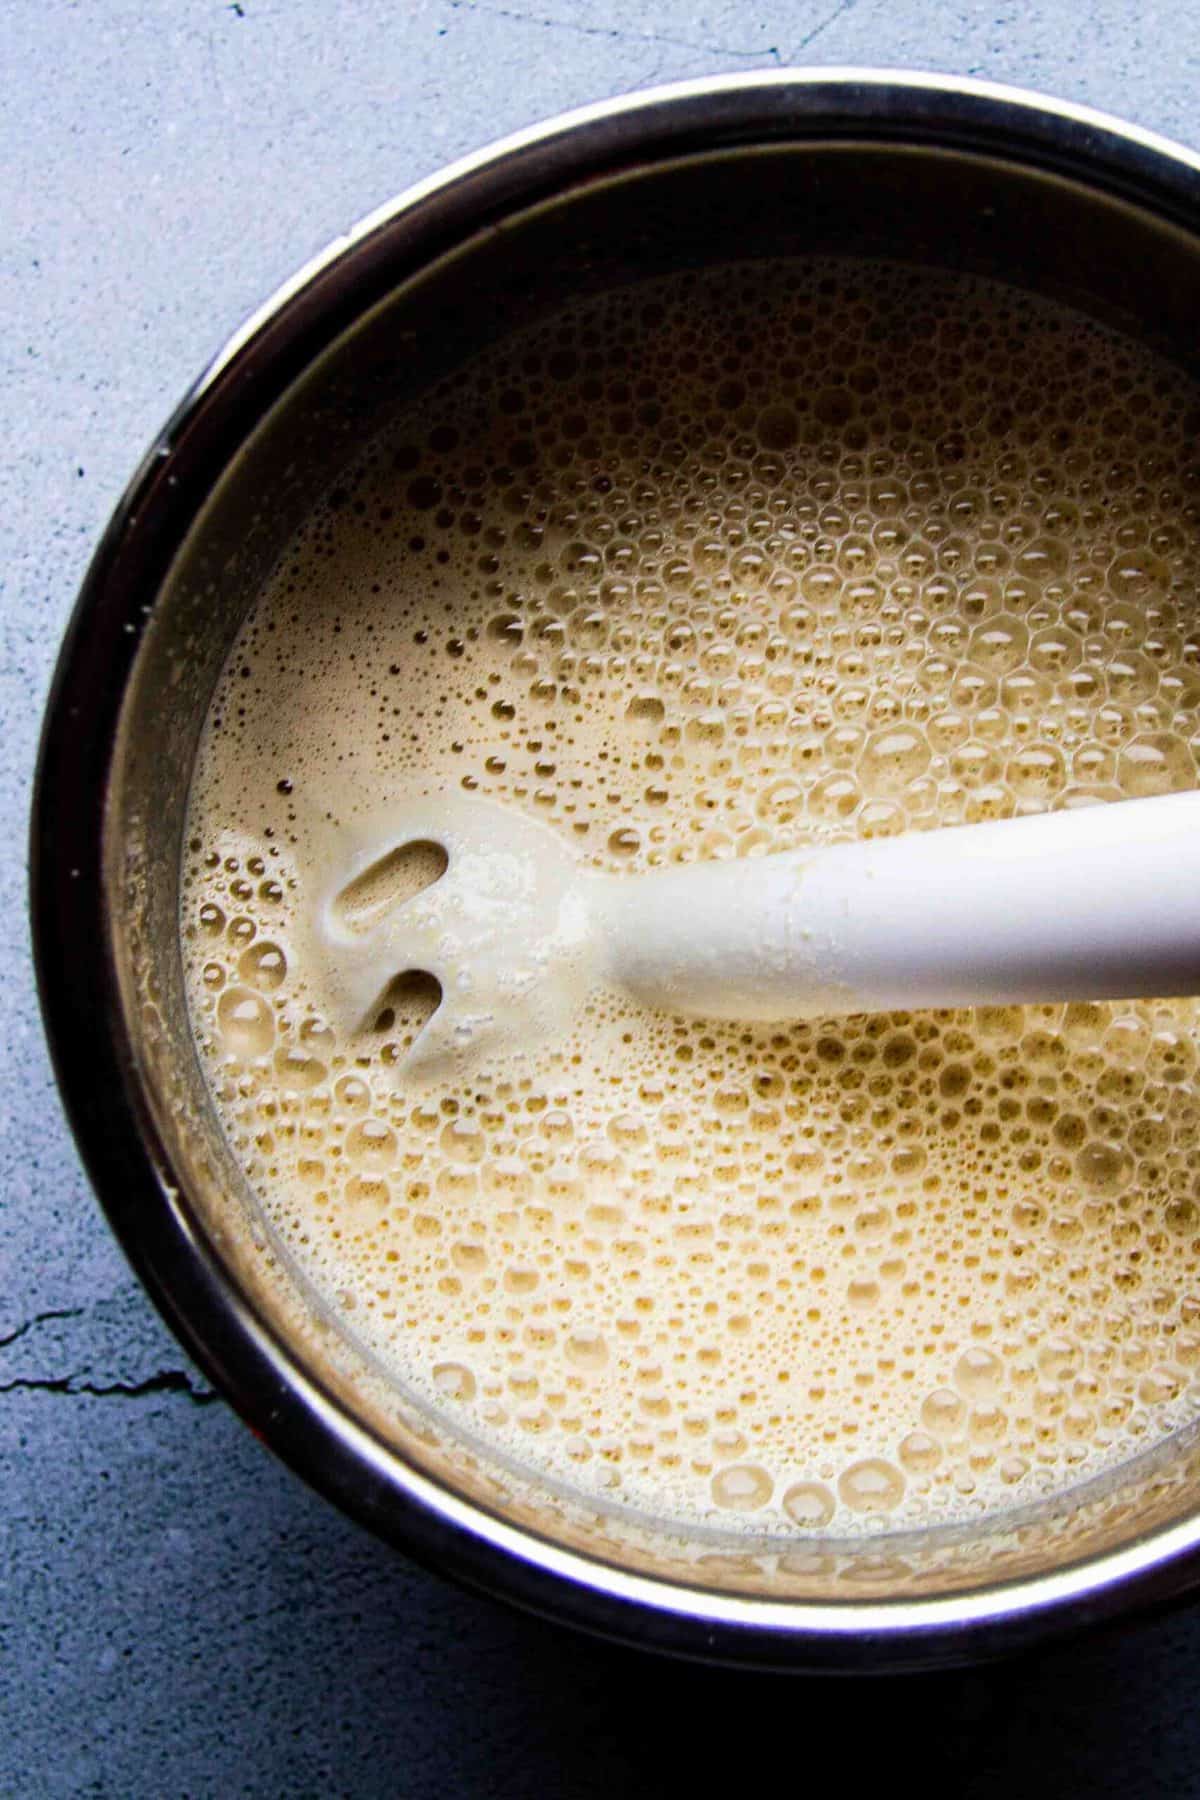 Blending the oat milk eggnog with the hand blender.